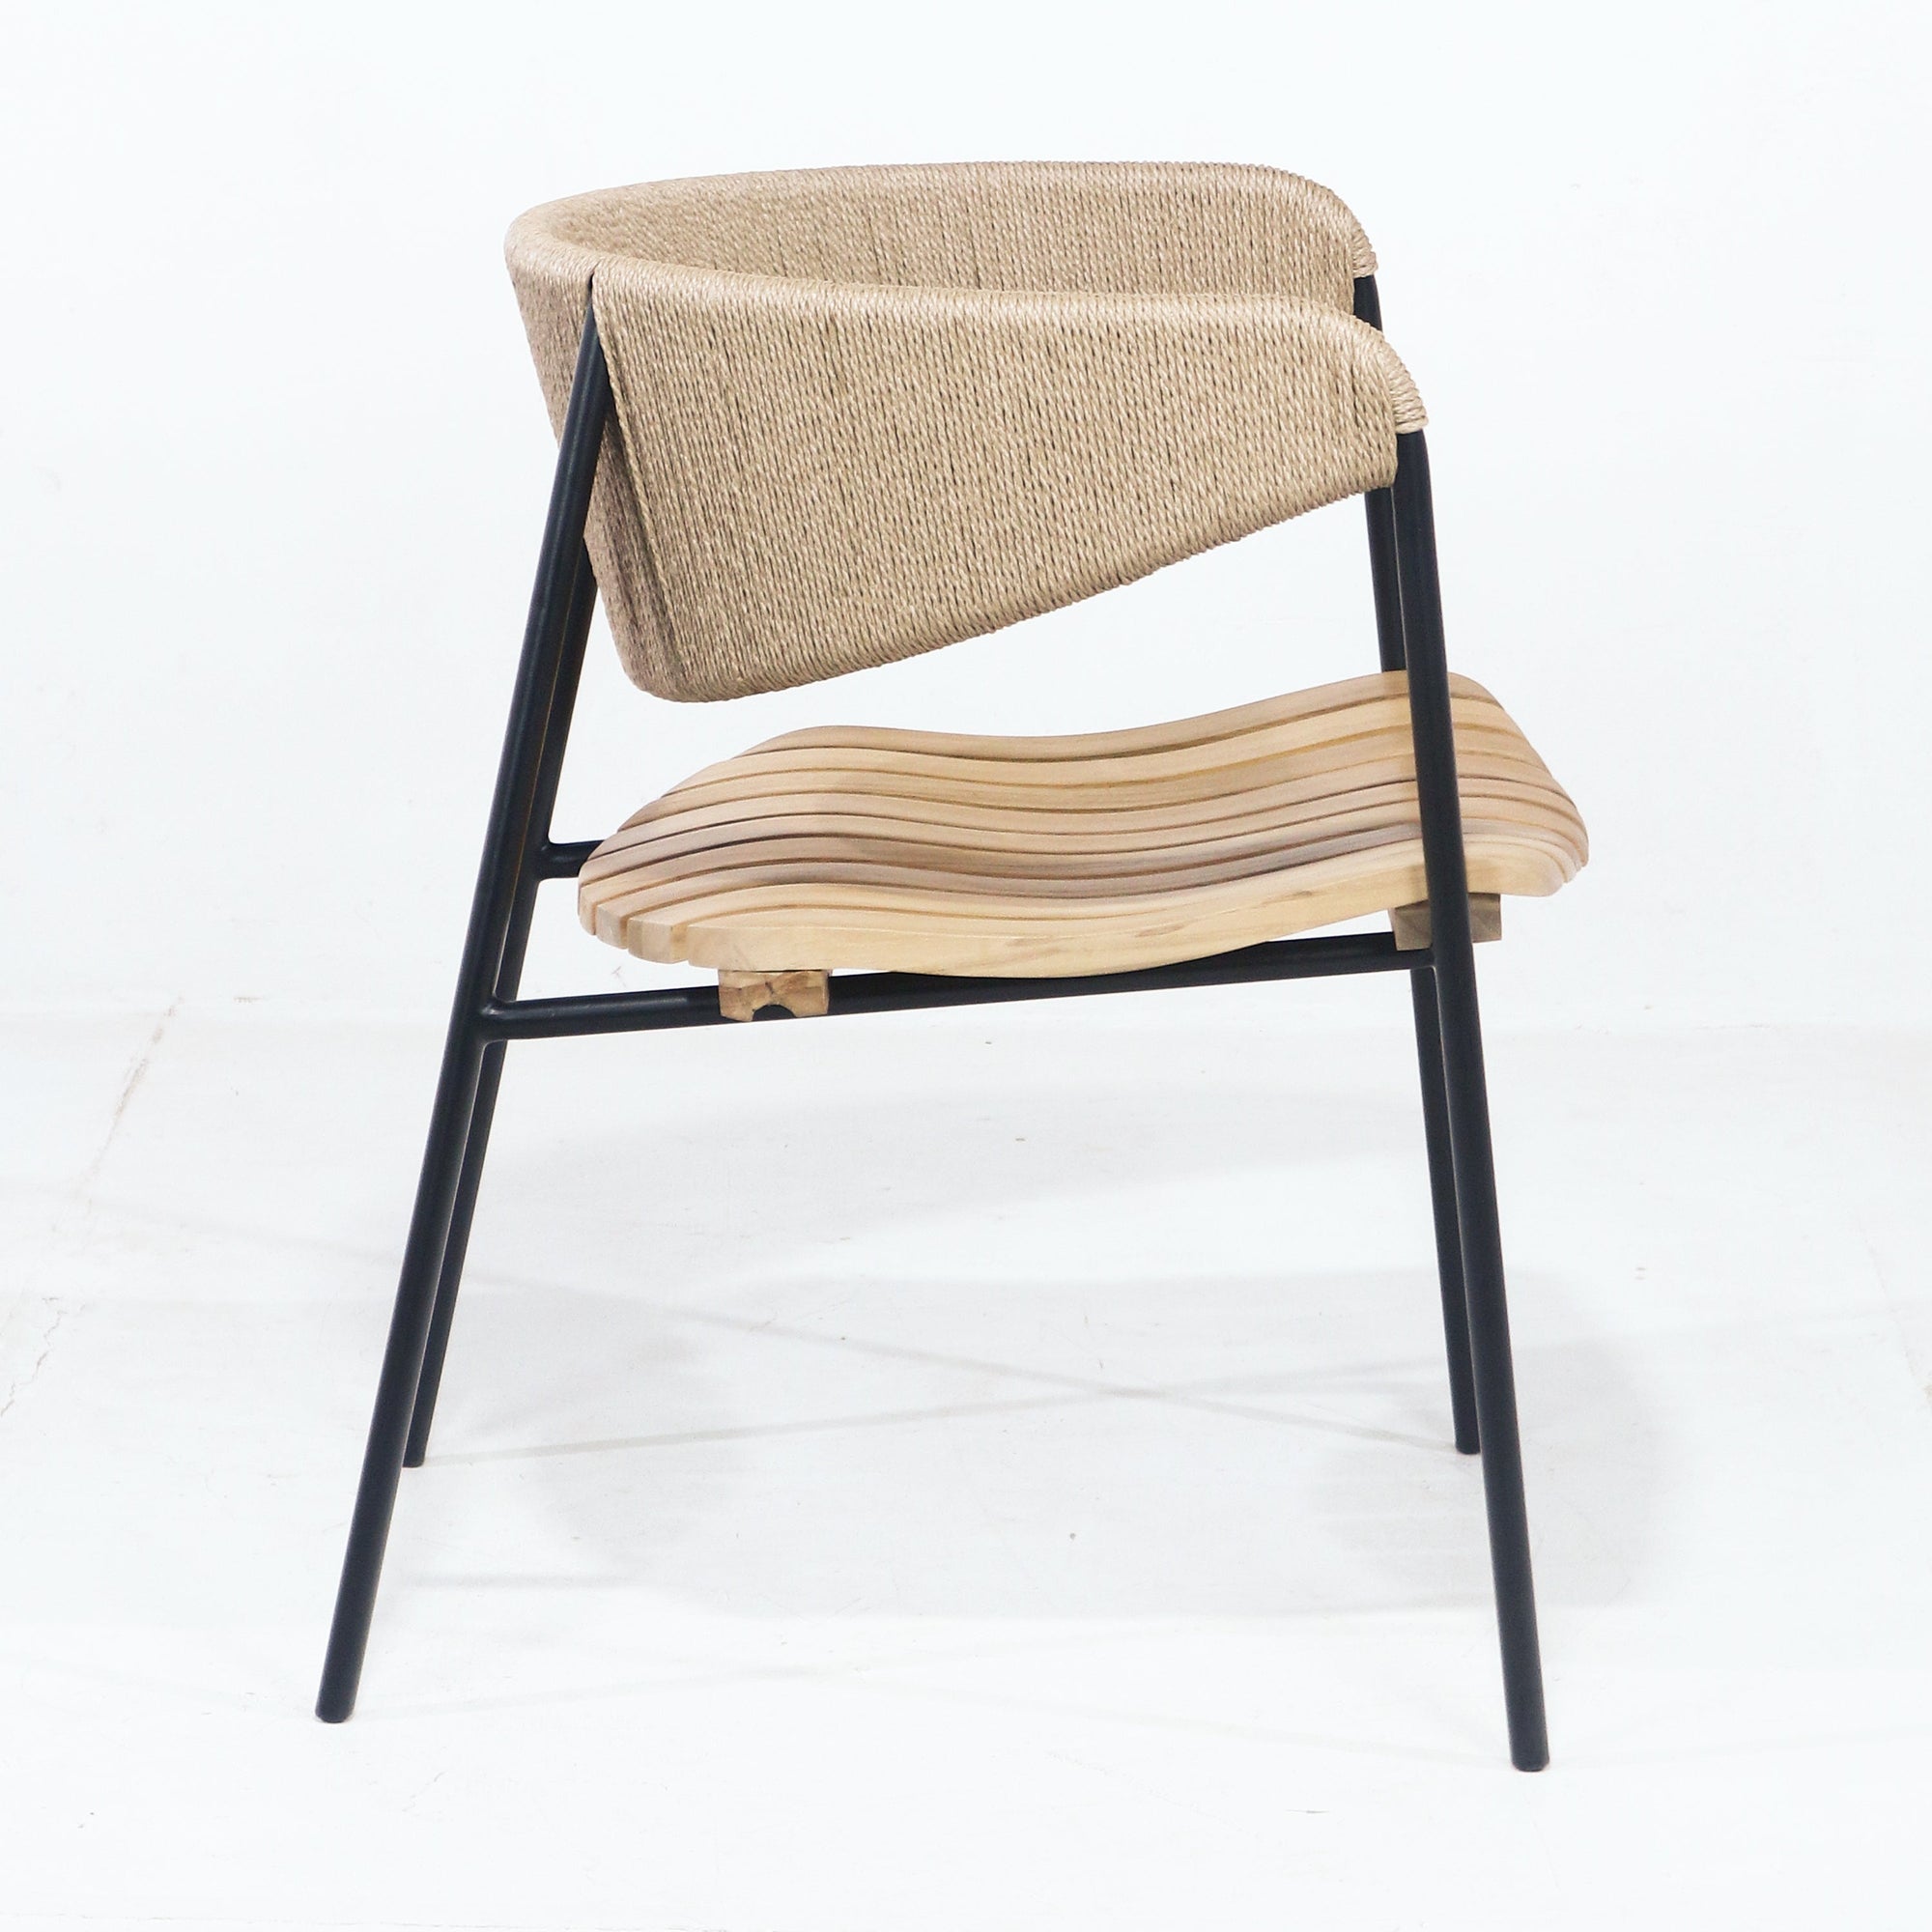 Clara Chair with Teak Seat and Rush Webbing - INTERIORTONIC